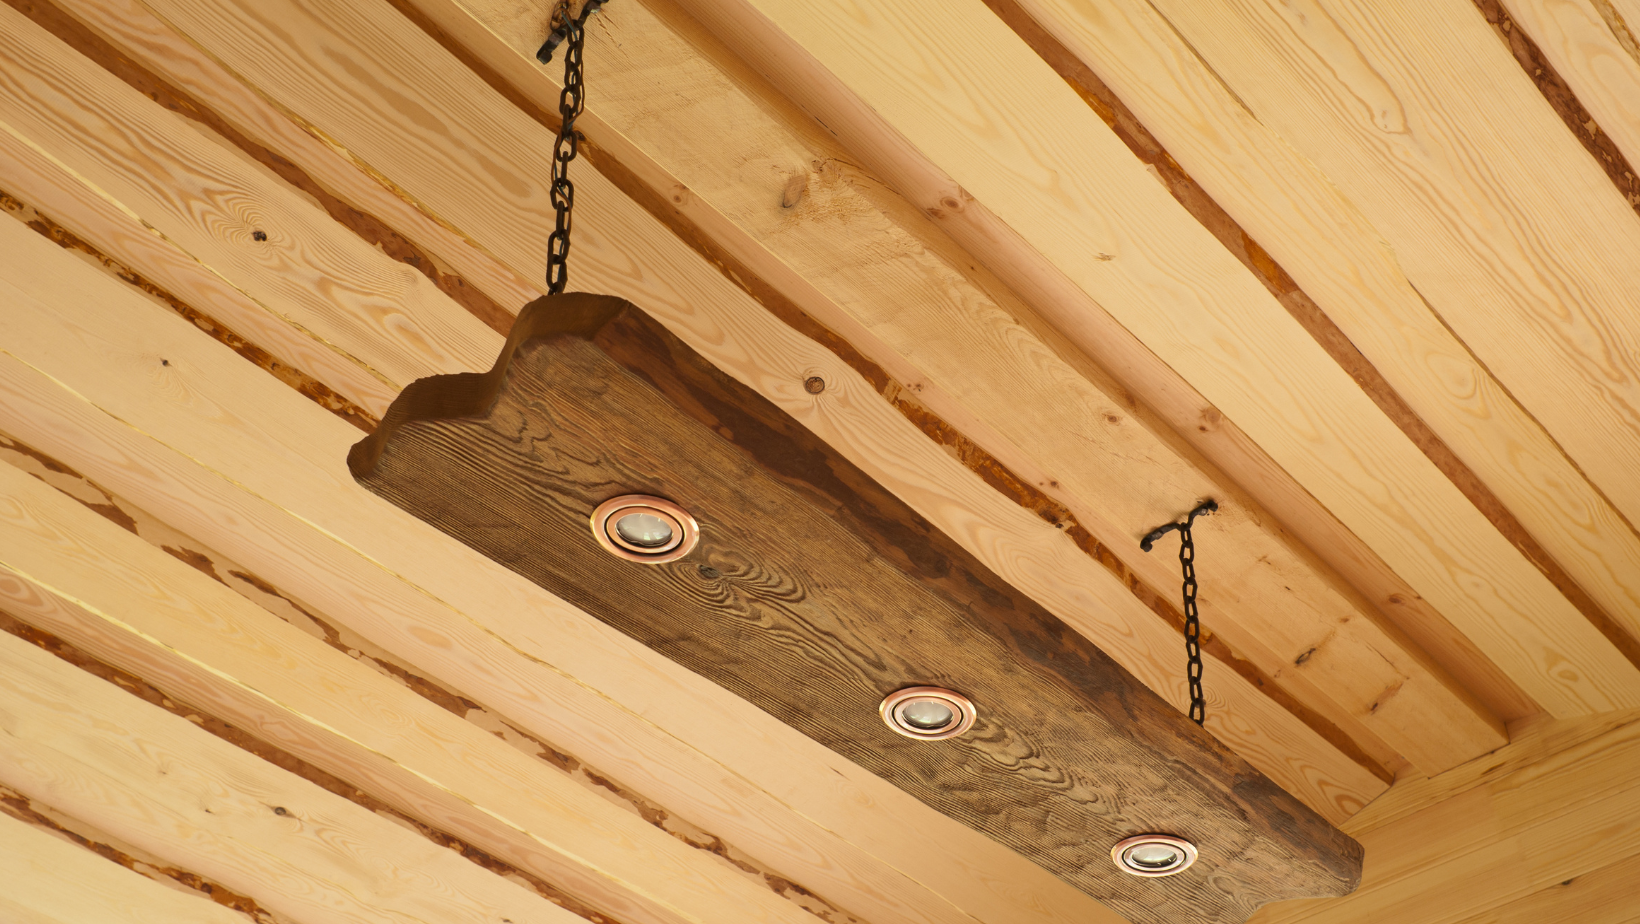 Drawbacks to wood ceiling restoration